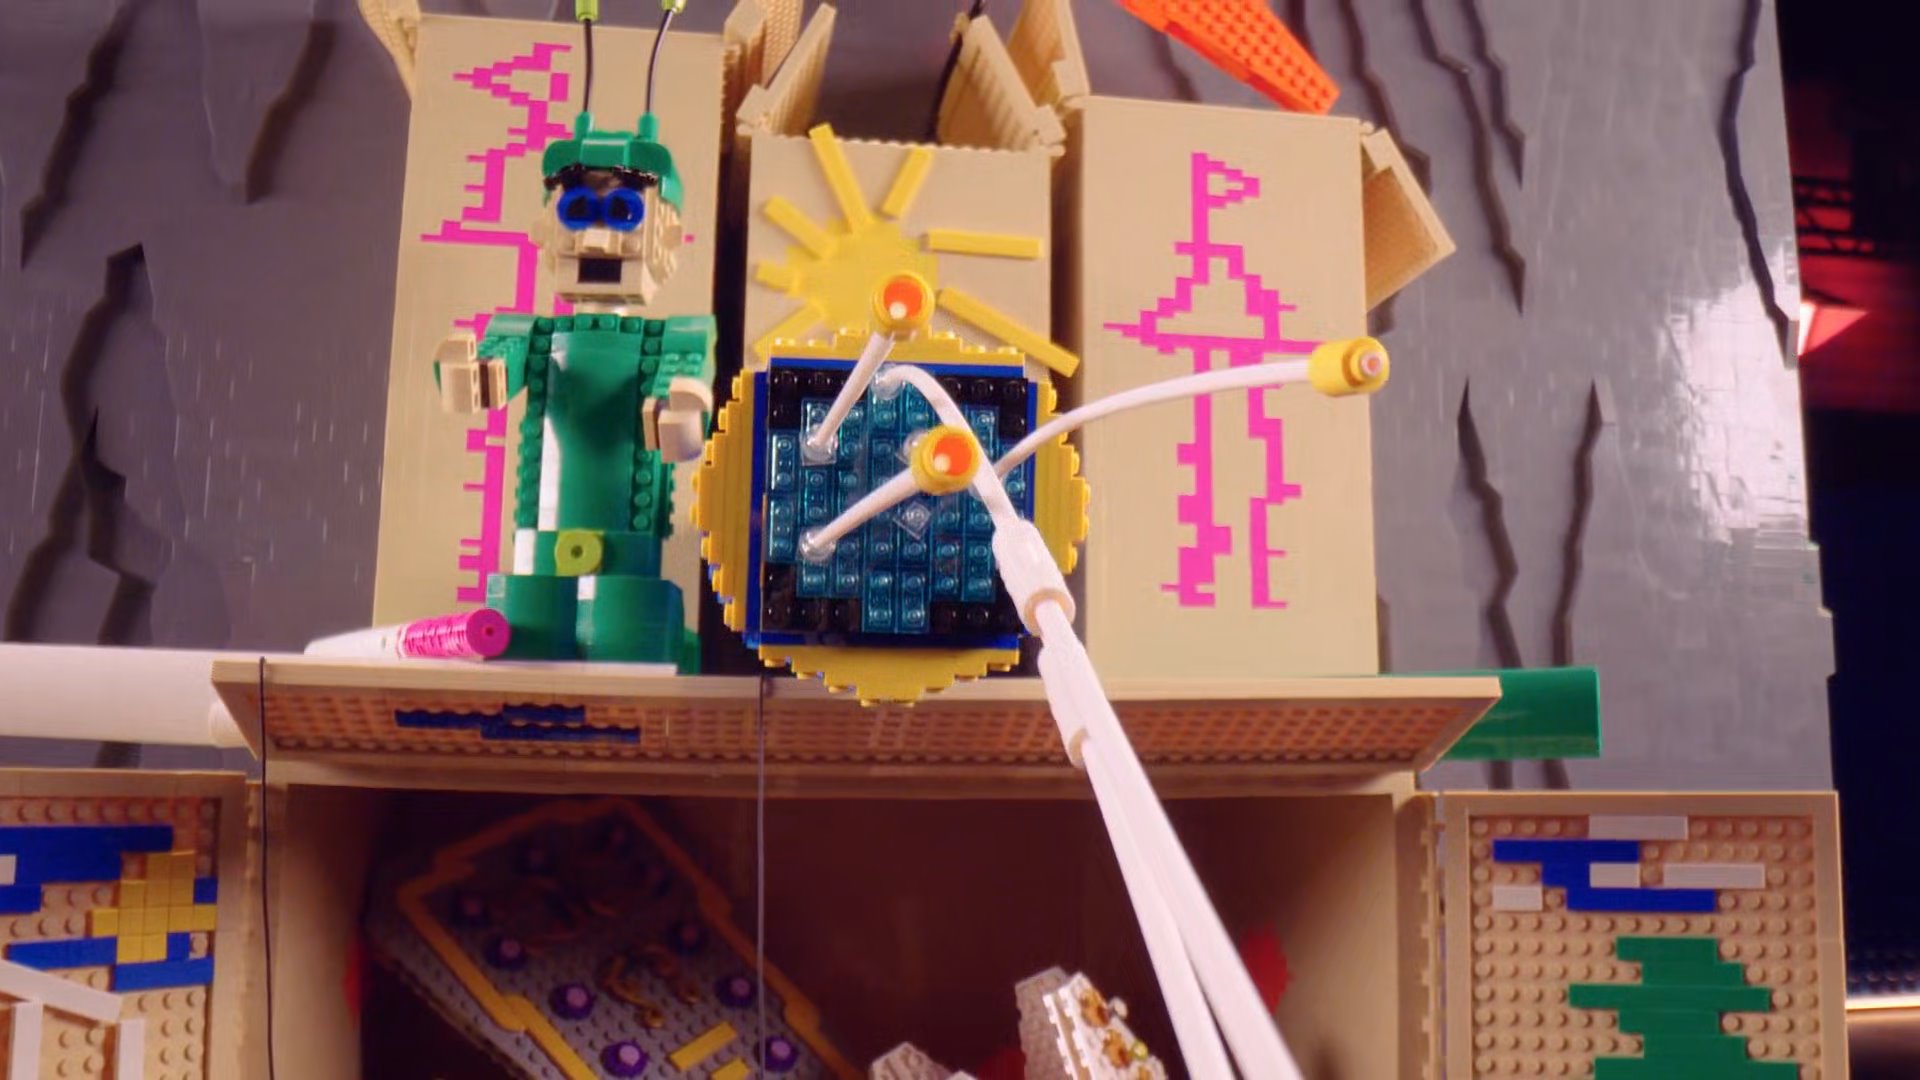 LEGO Masters U.S Season 2     – Cliffhanger  Challenge – Natalie and Michelle - Kid's Cardboard Castle